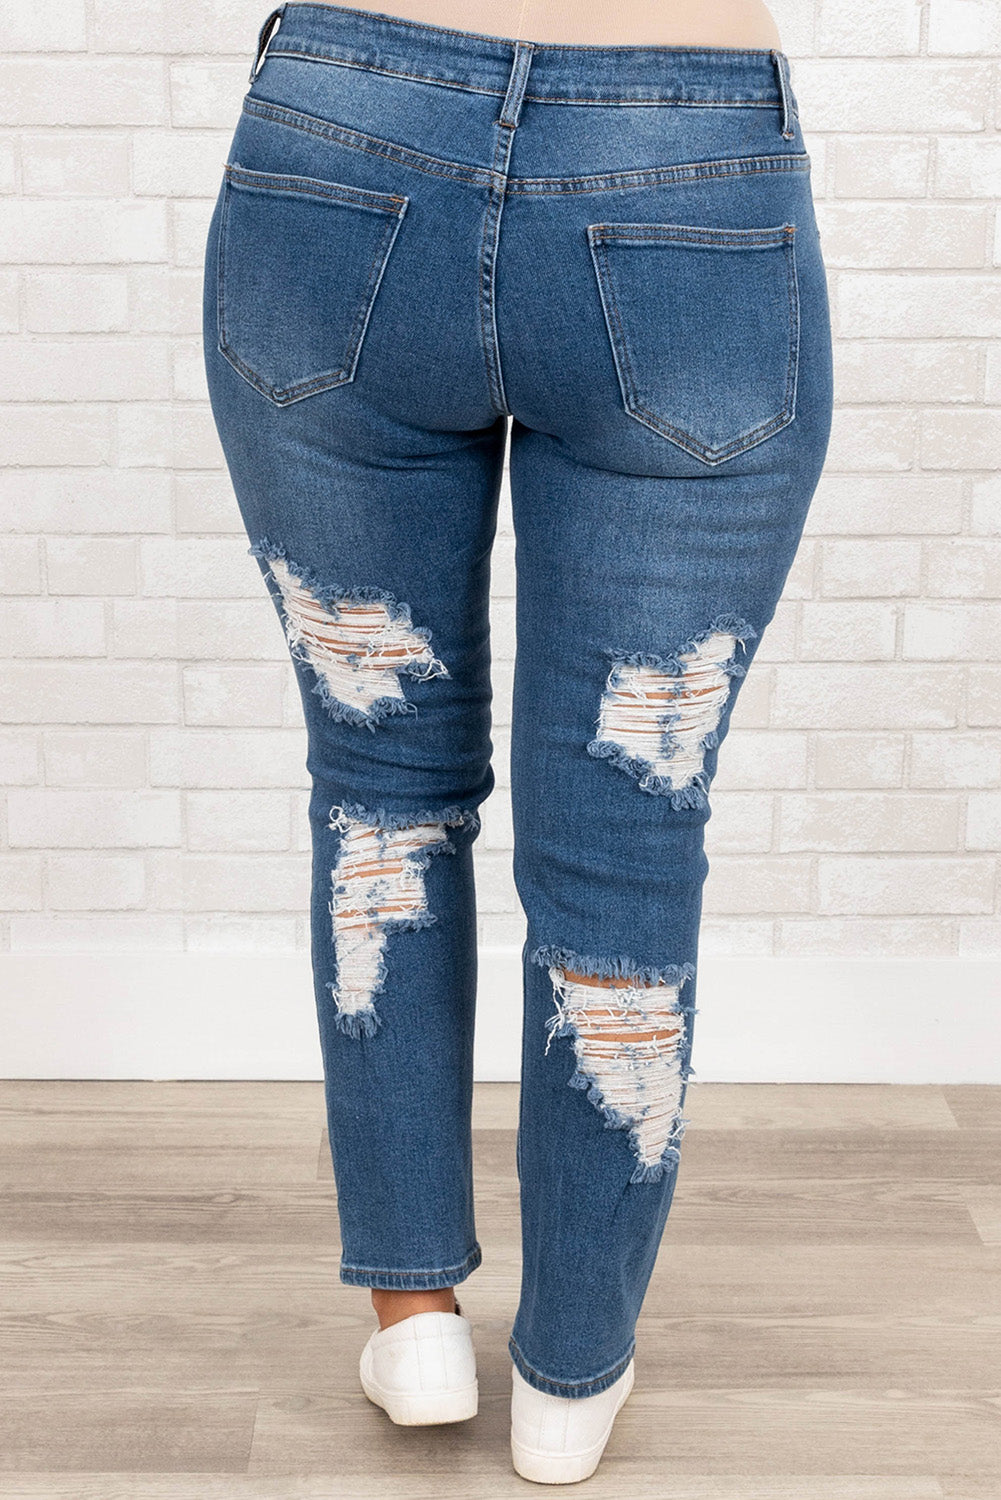 Lara Blue Distressed Ripped Skinny Jeans - The Bohemian Closet